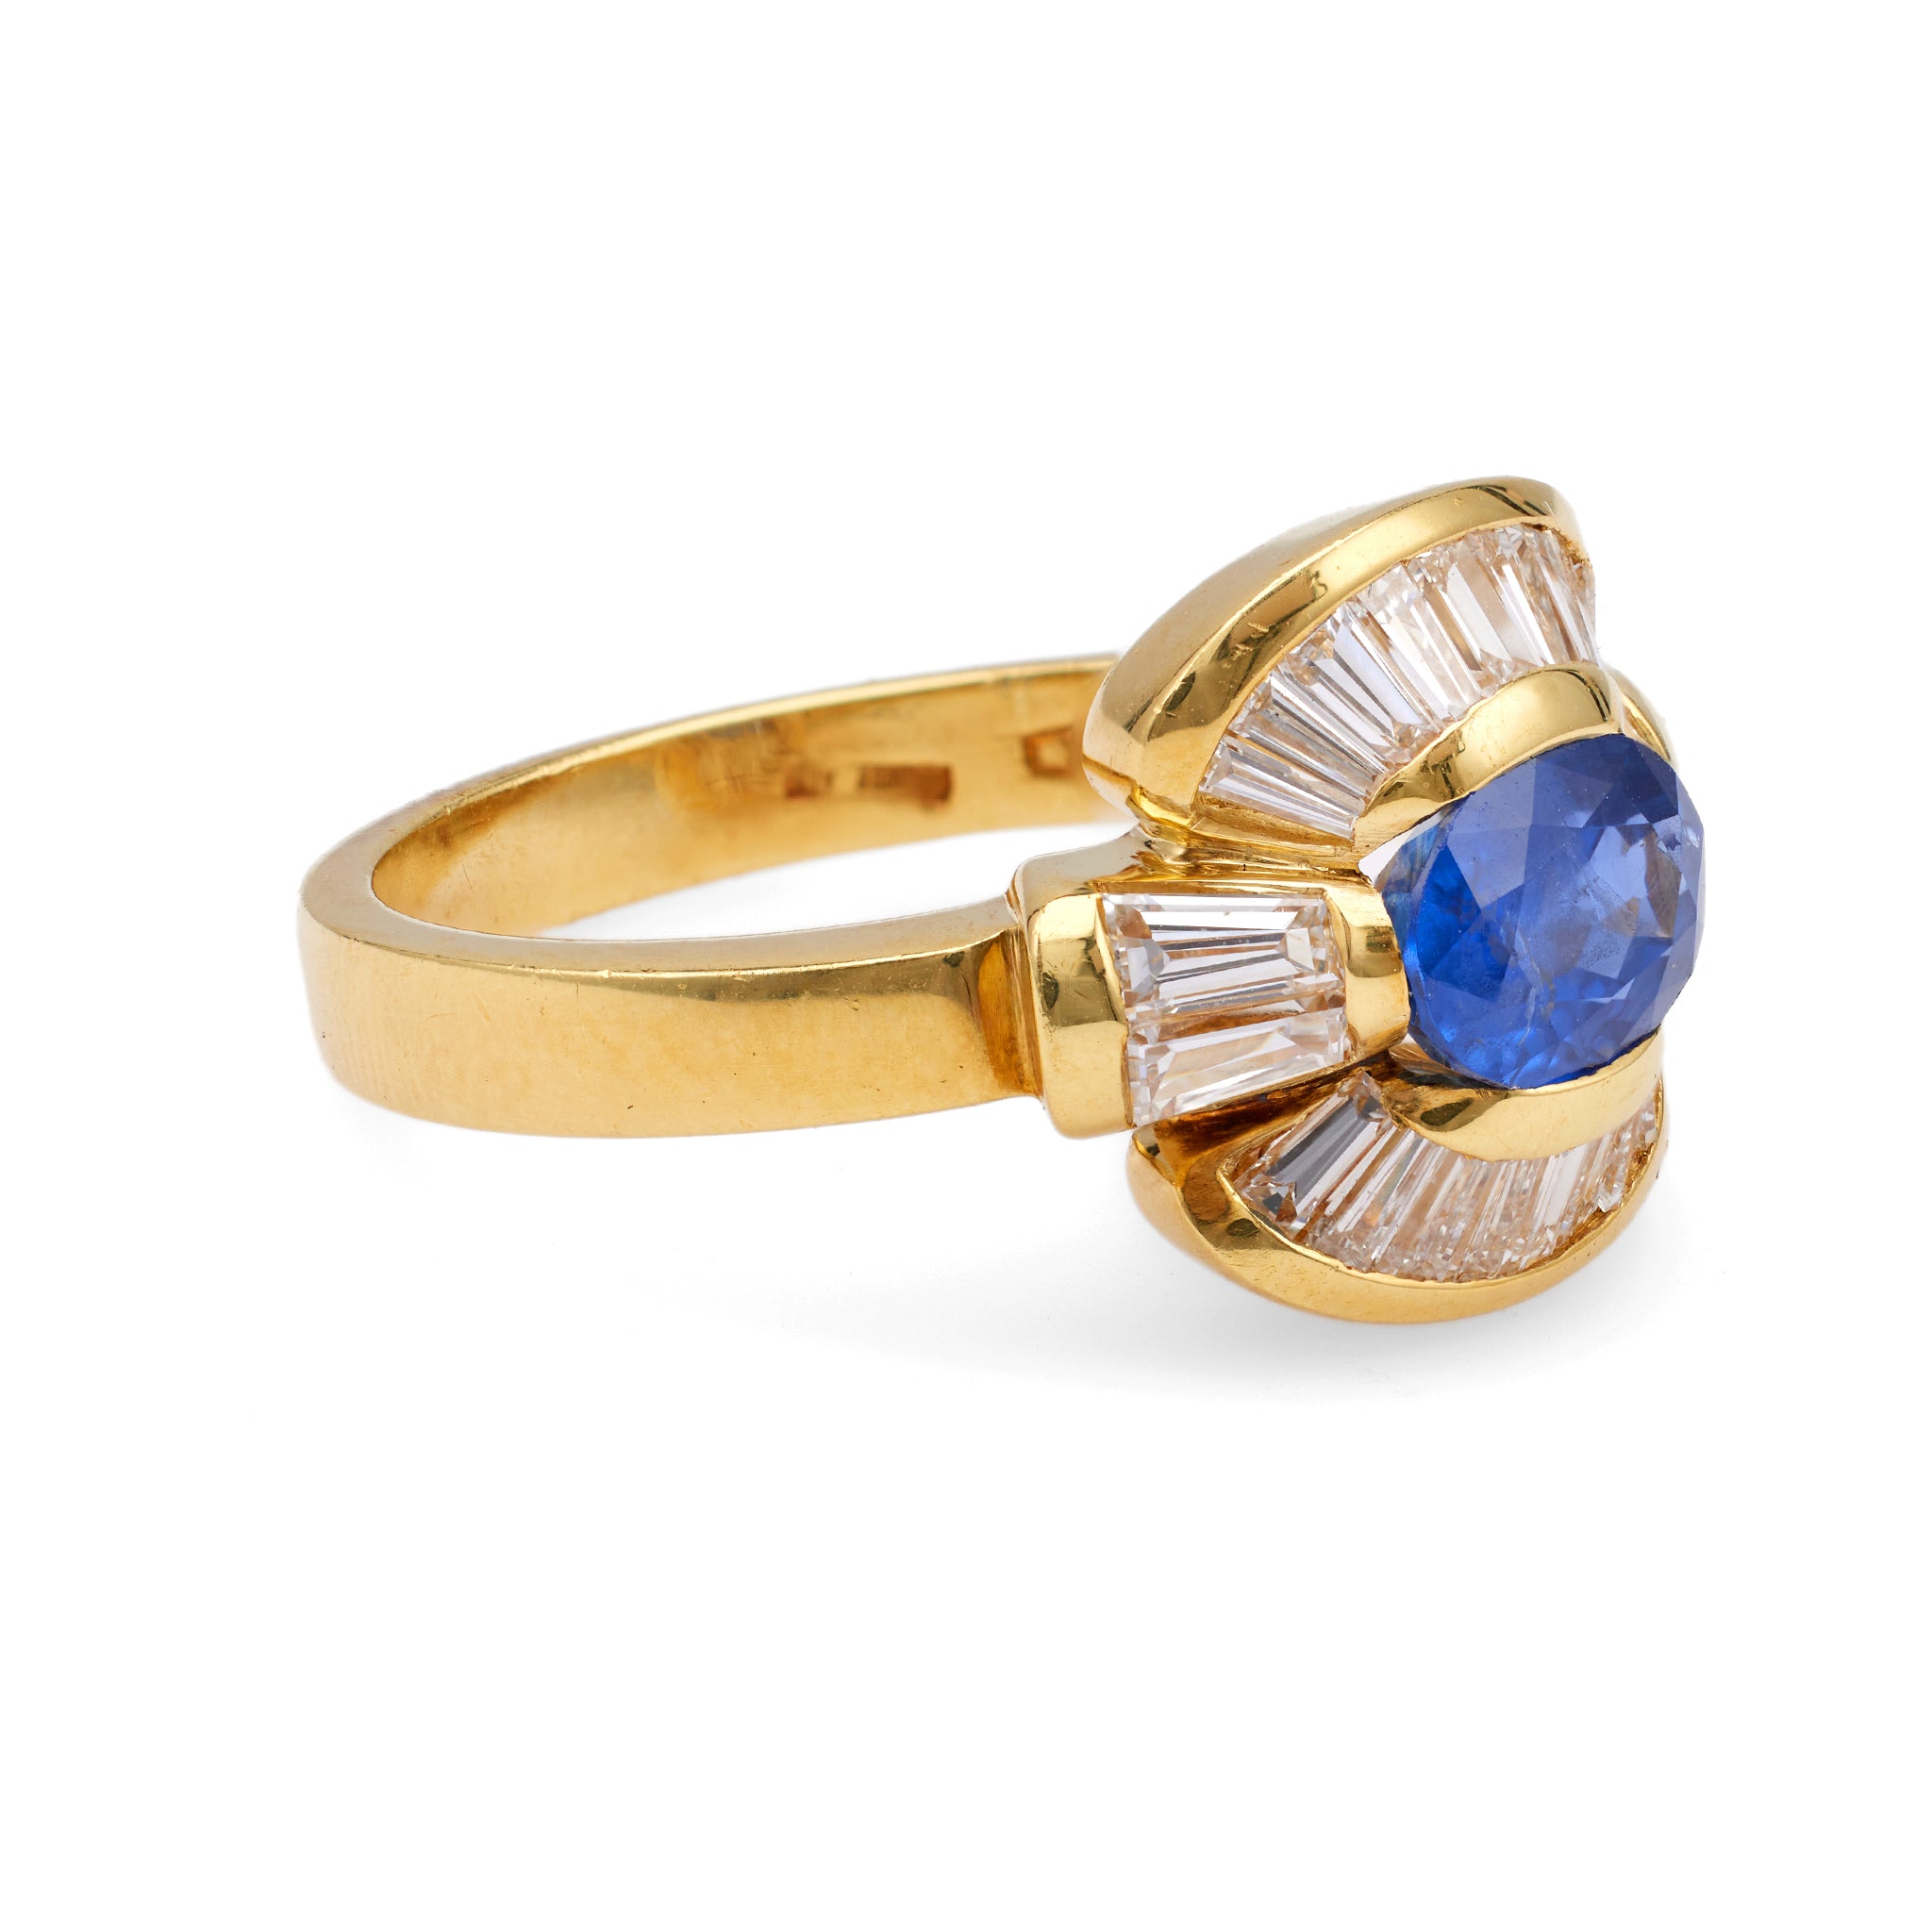 Vintage Italian Sapphire Diamond 18k Yellow Gold Ring Rings Jack Weir & Sons   